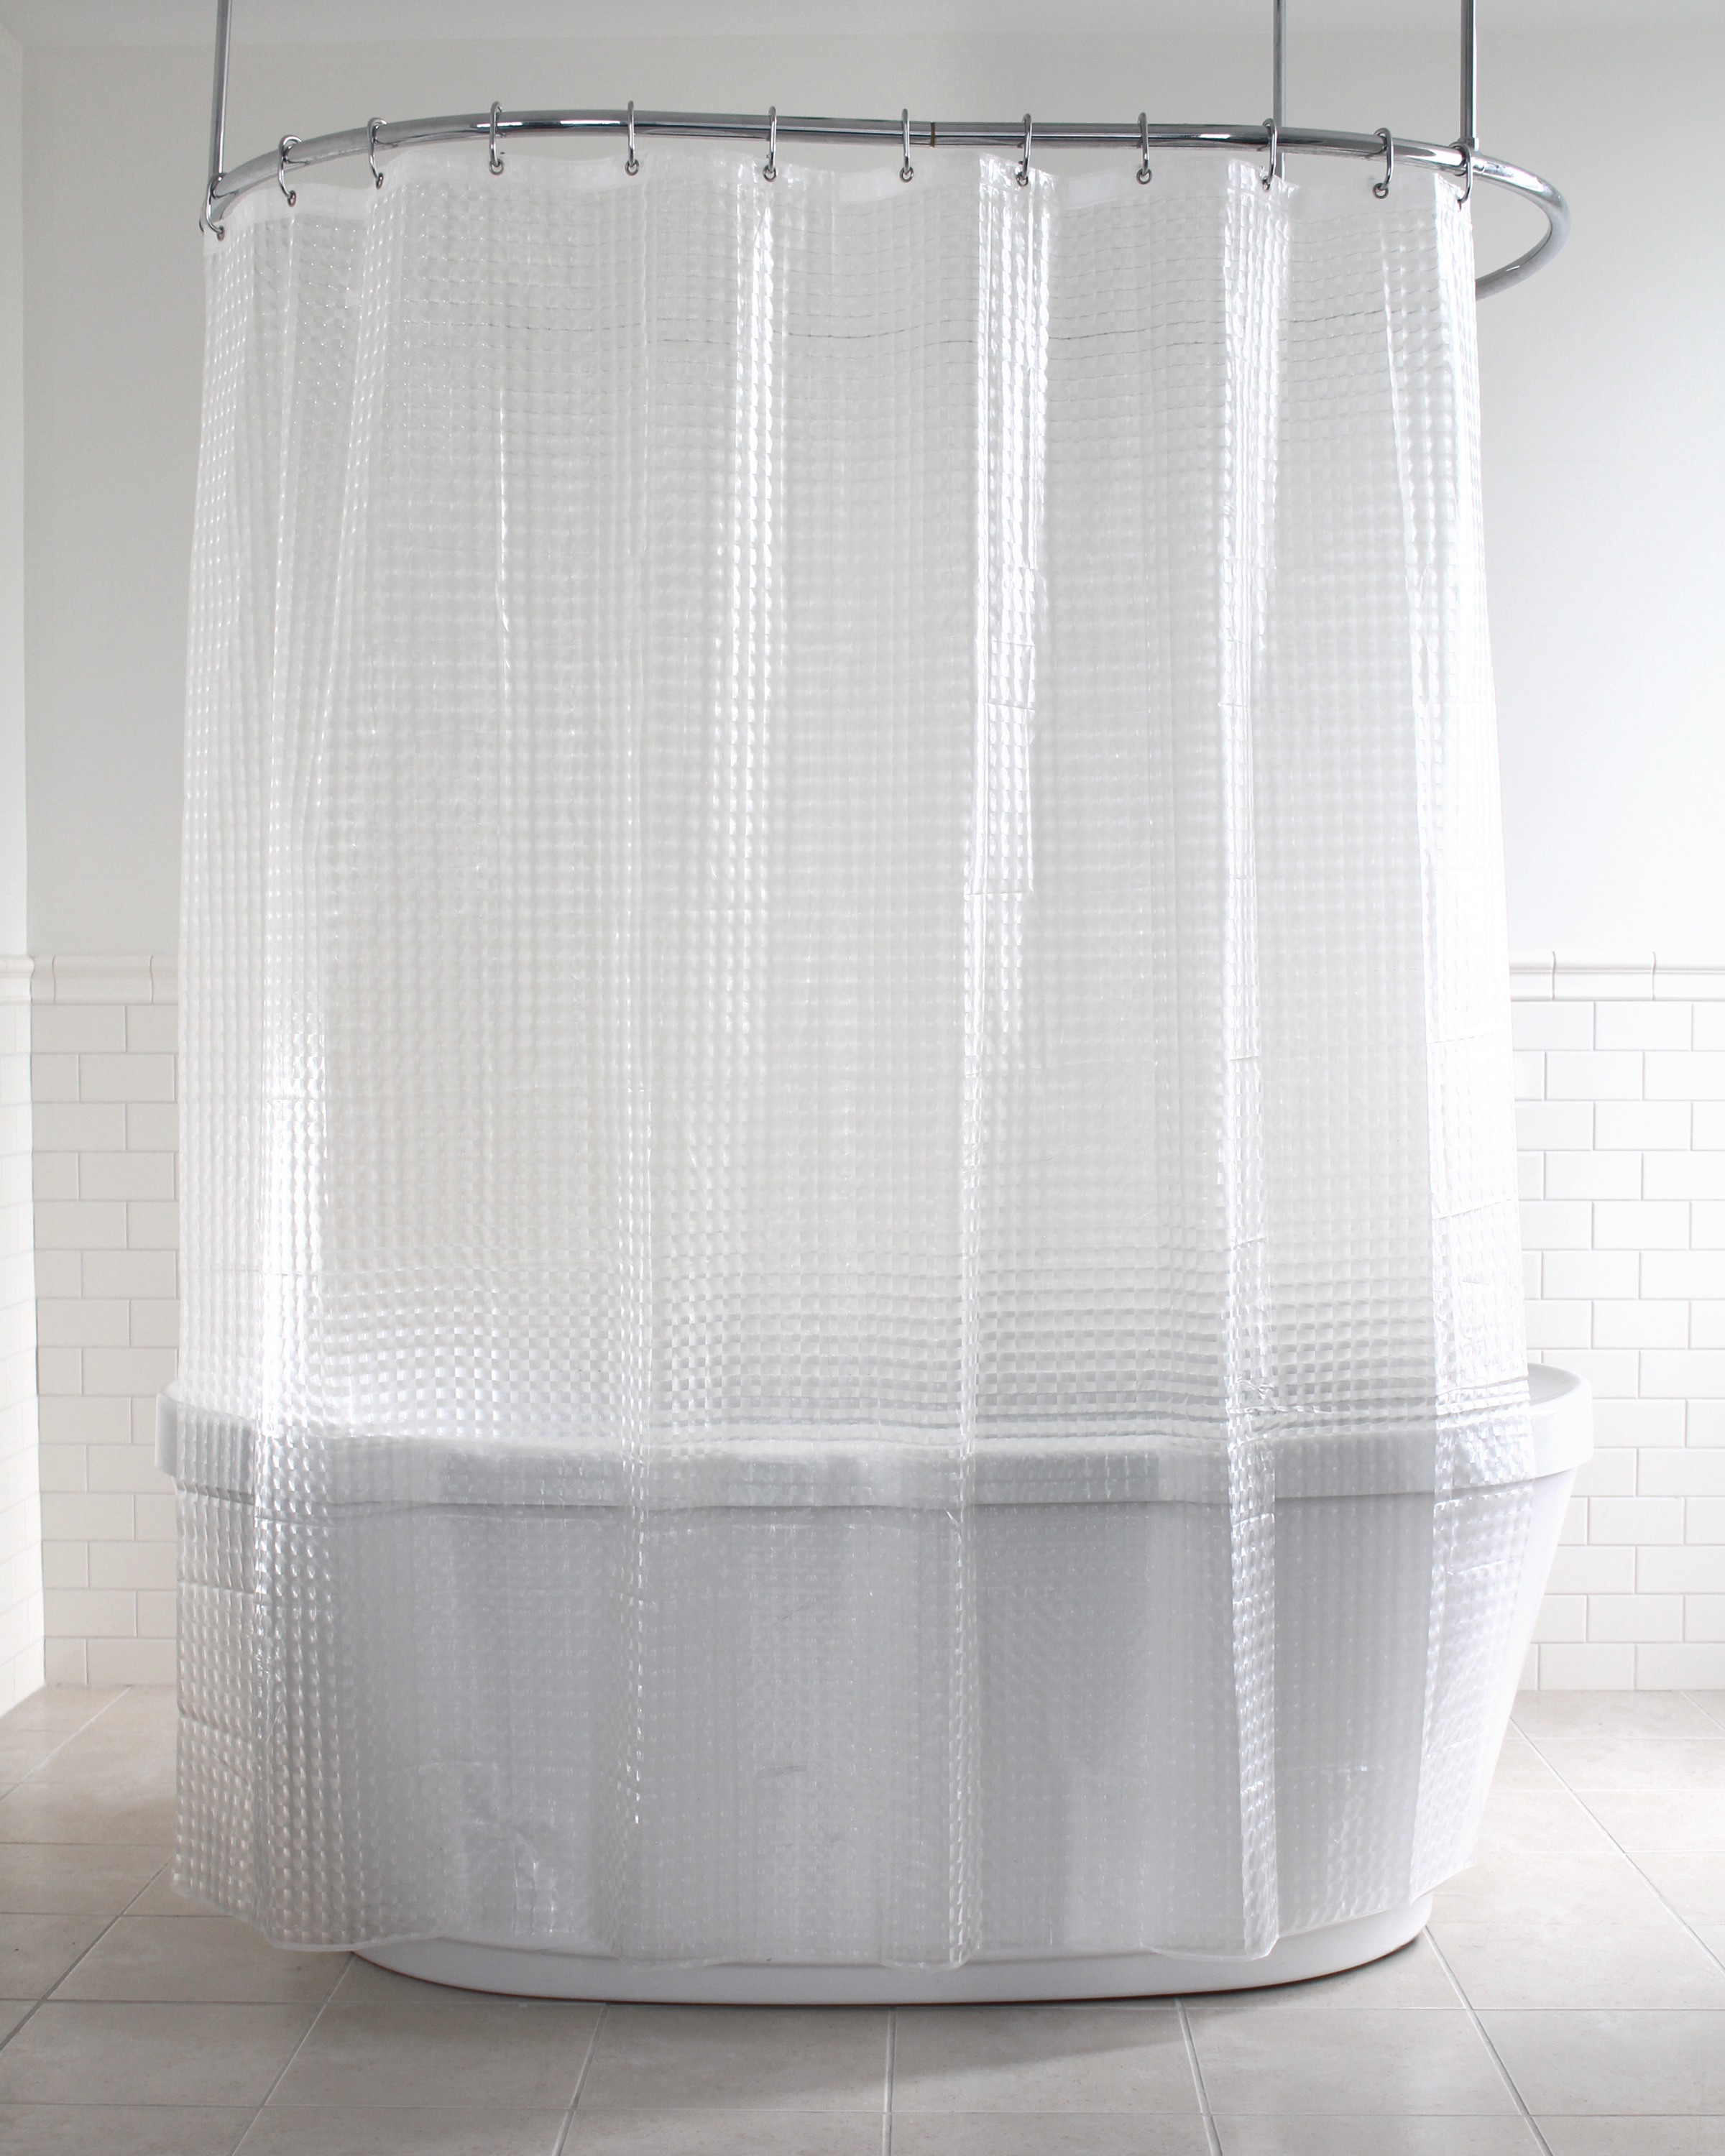 Shower Curtains Splash Home, Splash Home Vinyl Shower Curtains